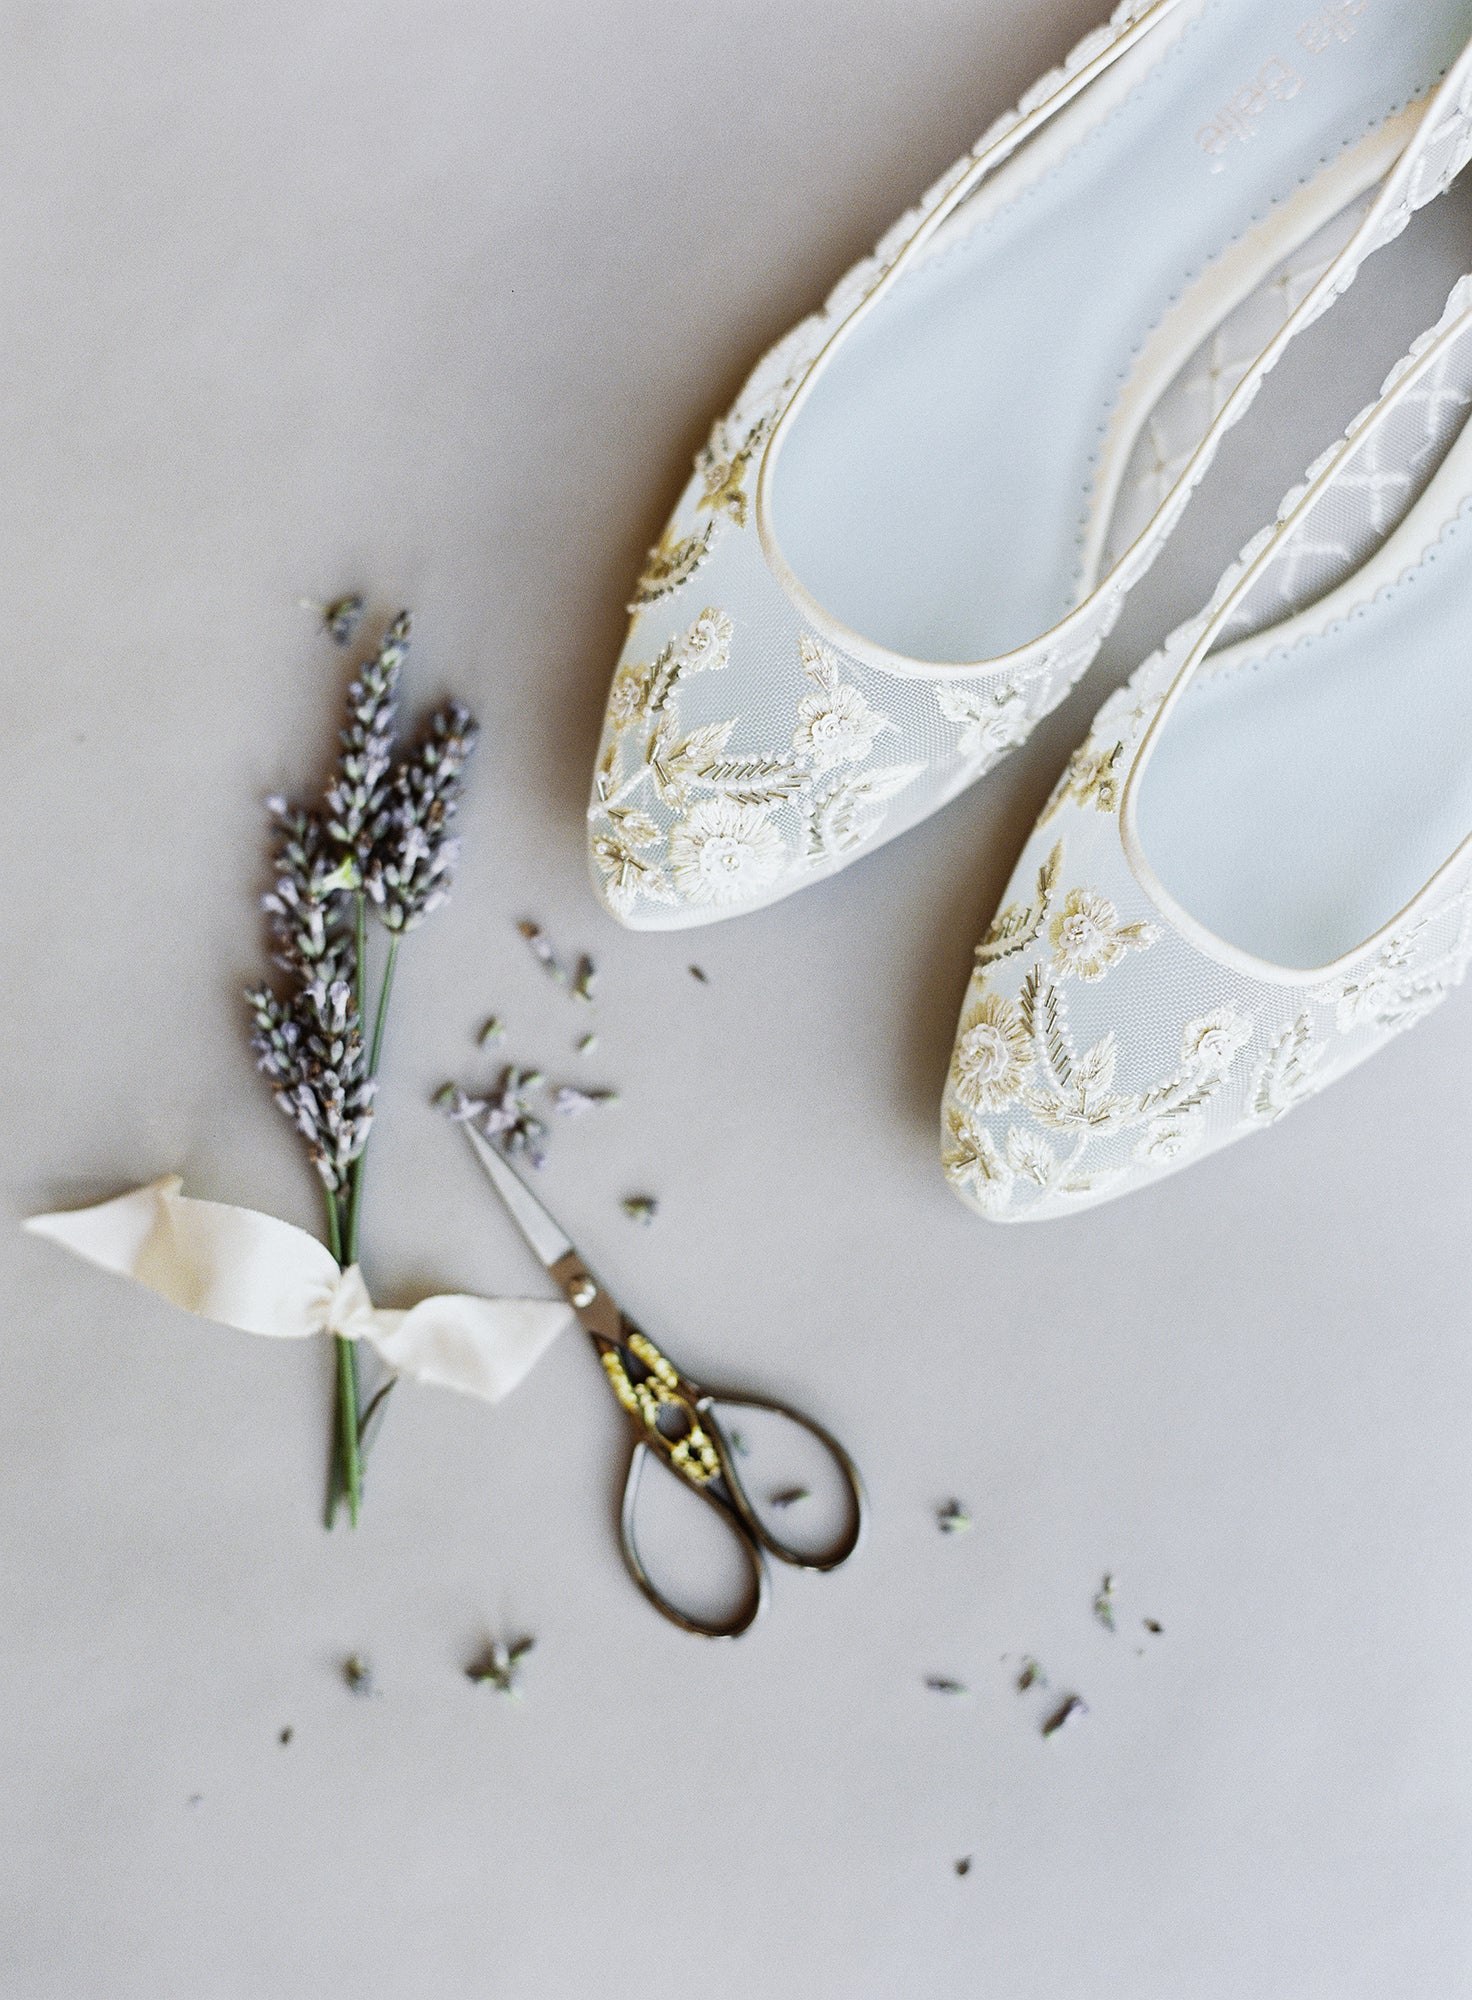 6 Wedding Shoe Mistakes To Avoid